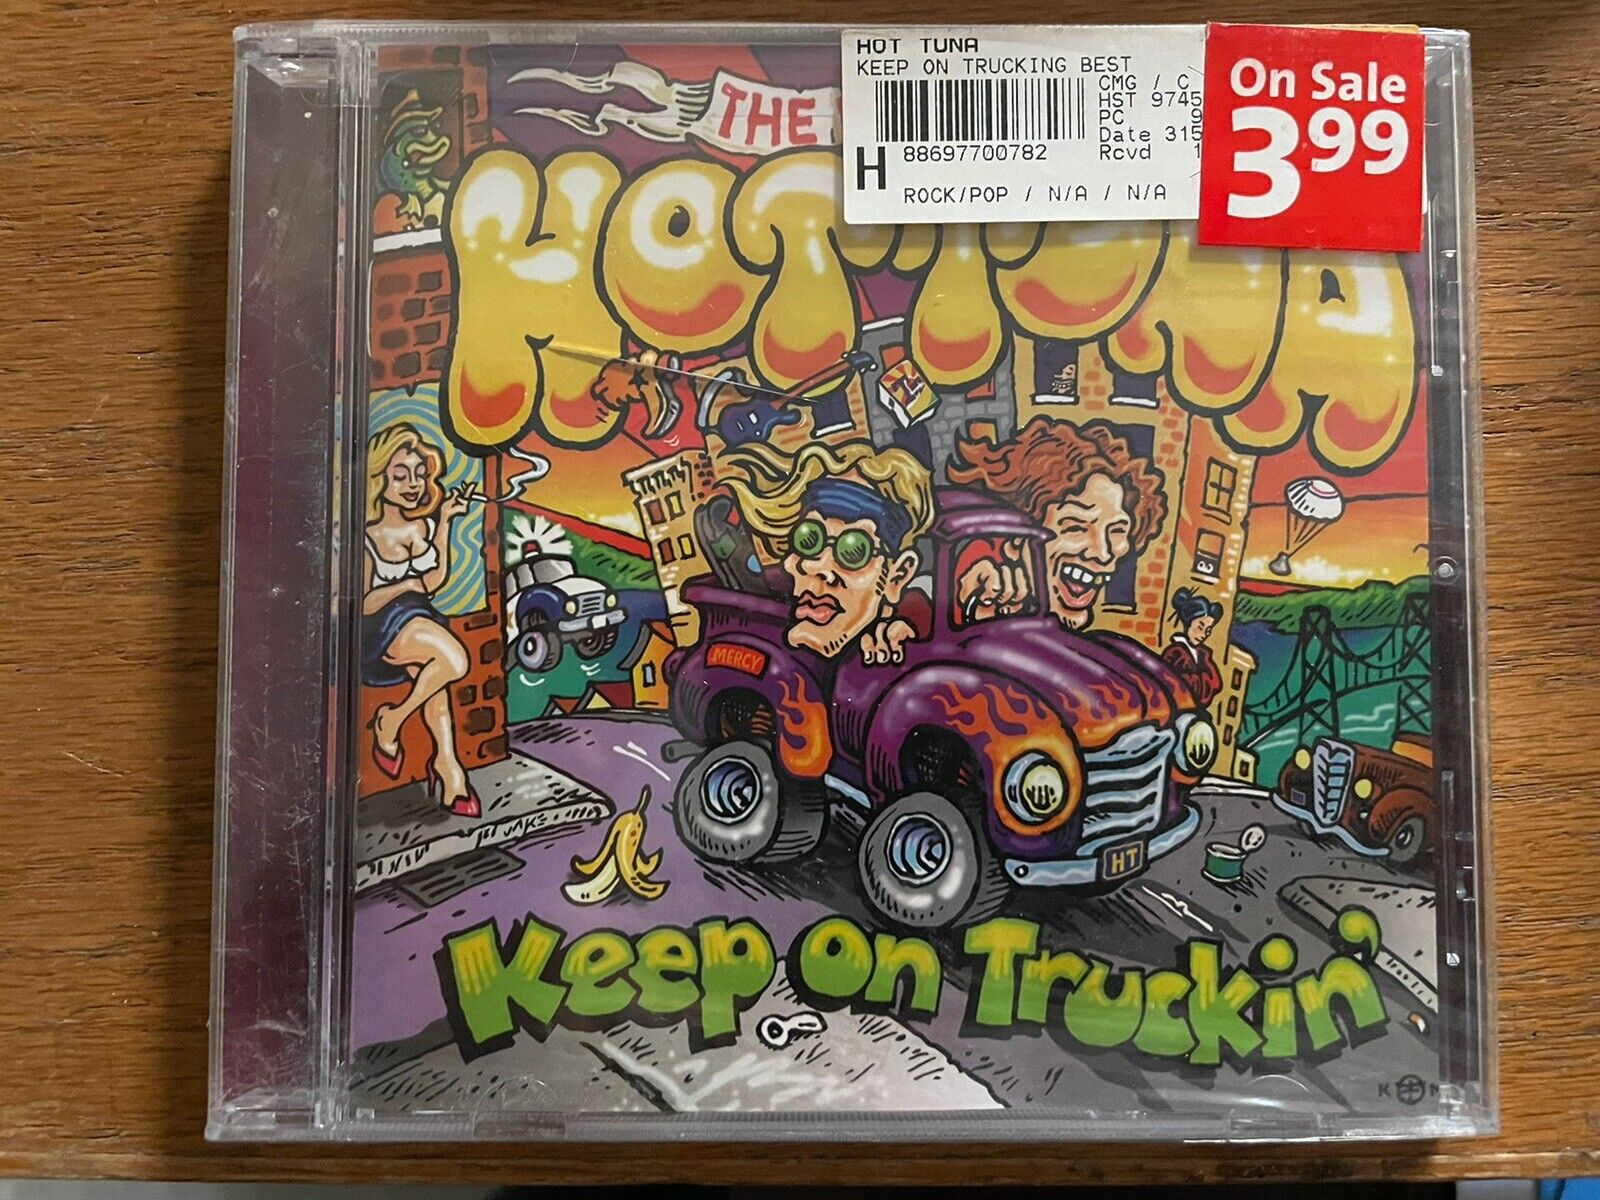 Keep on Truckin\': The Very Best of Hot Tuna by Hot Tuna (CD, 2006) *NEW*